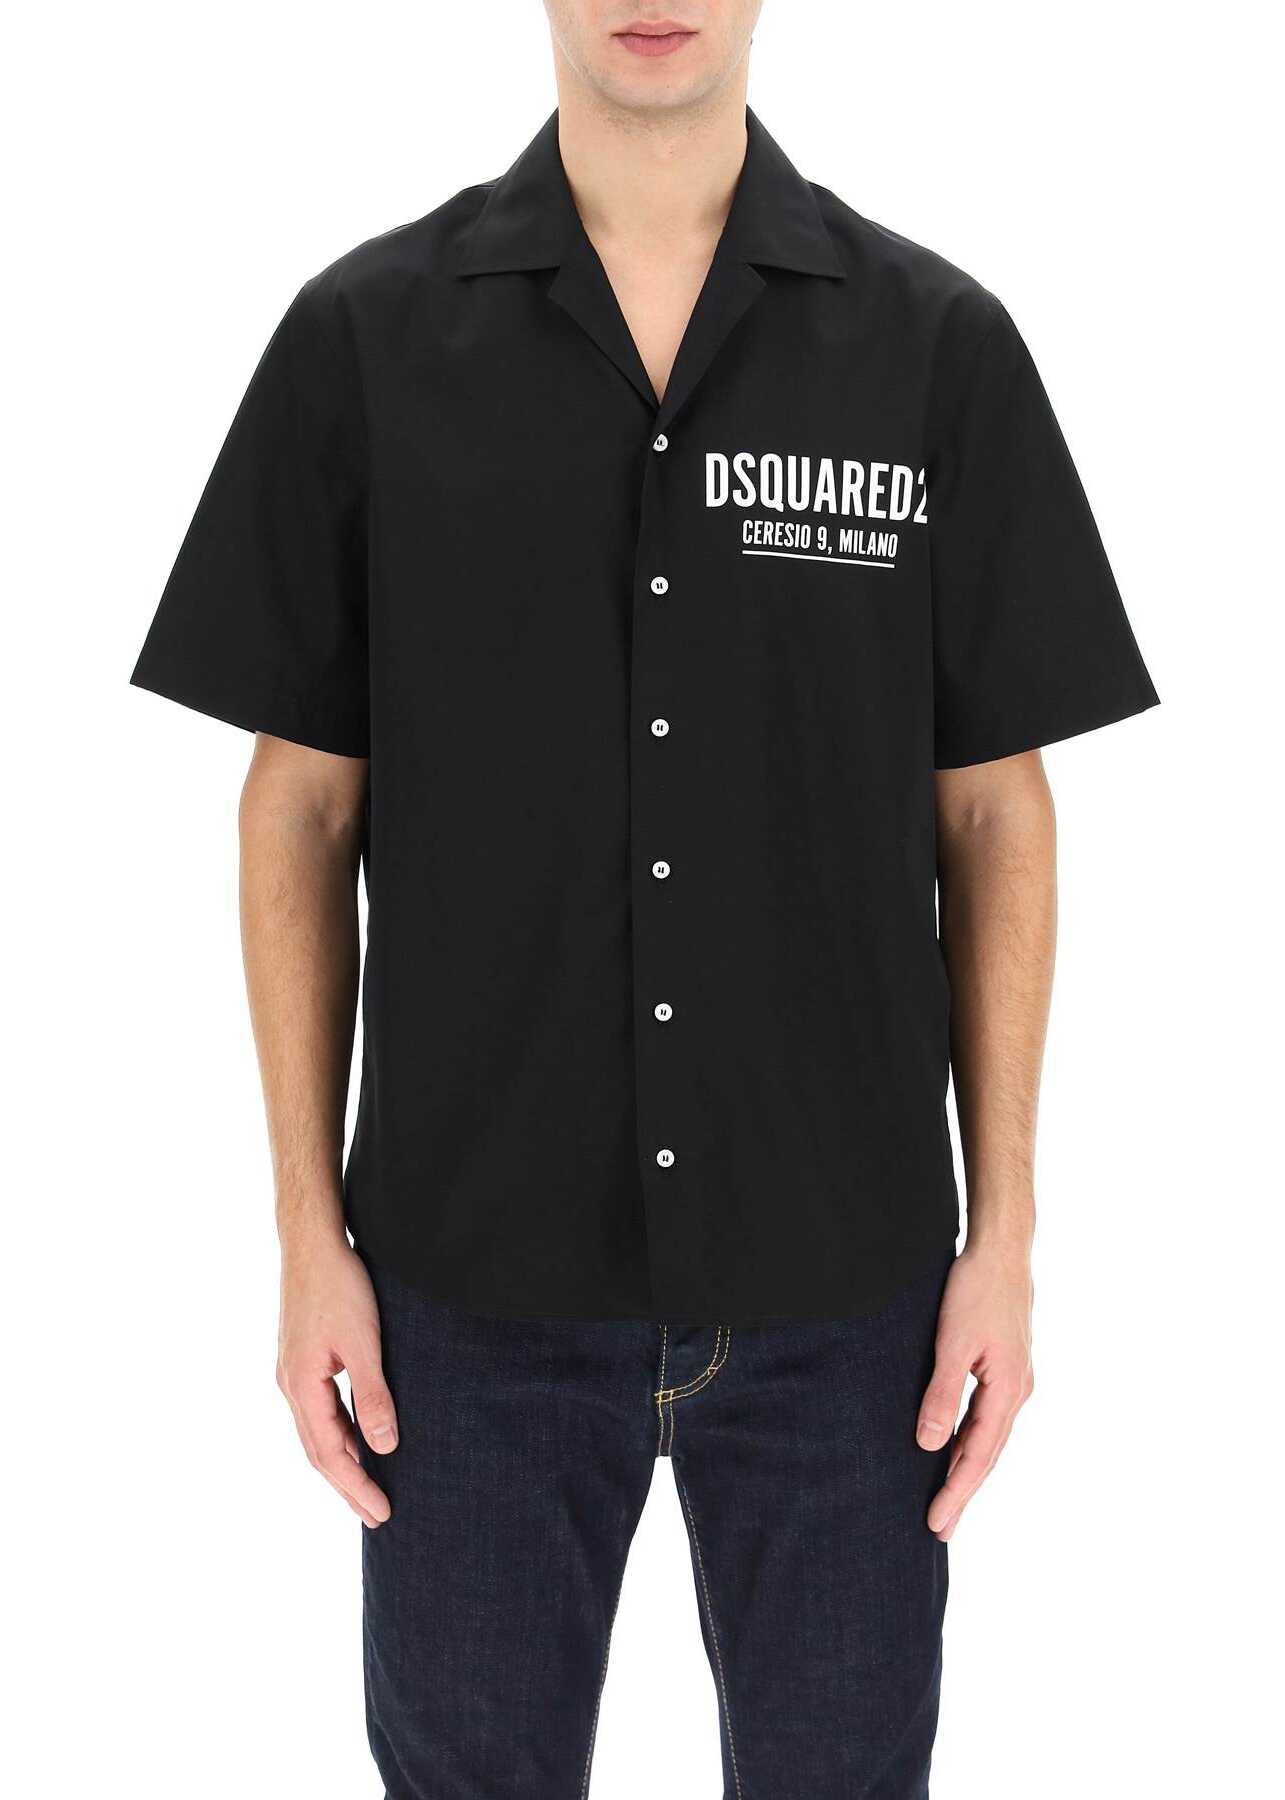 DSQUARED2 Ceresio 9 Short Sleeve Shirt S74DM0557 S36275 BLACK